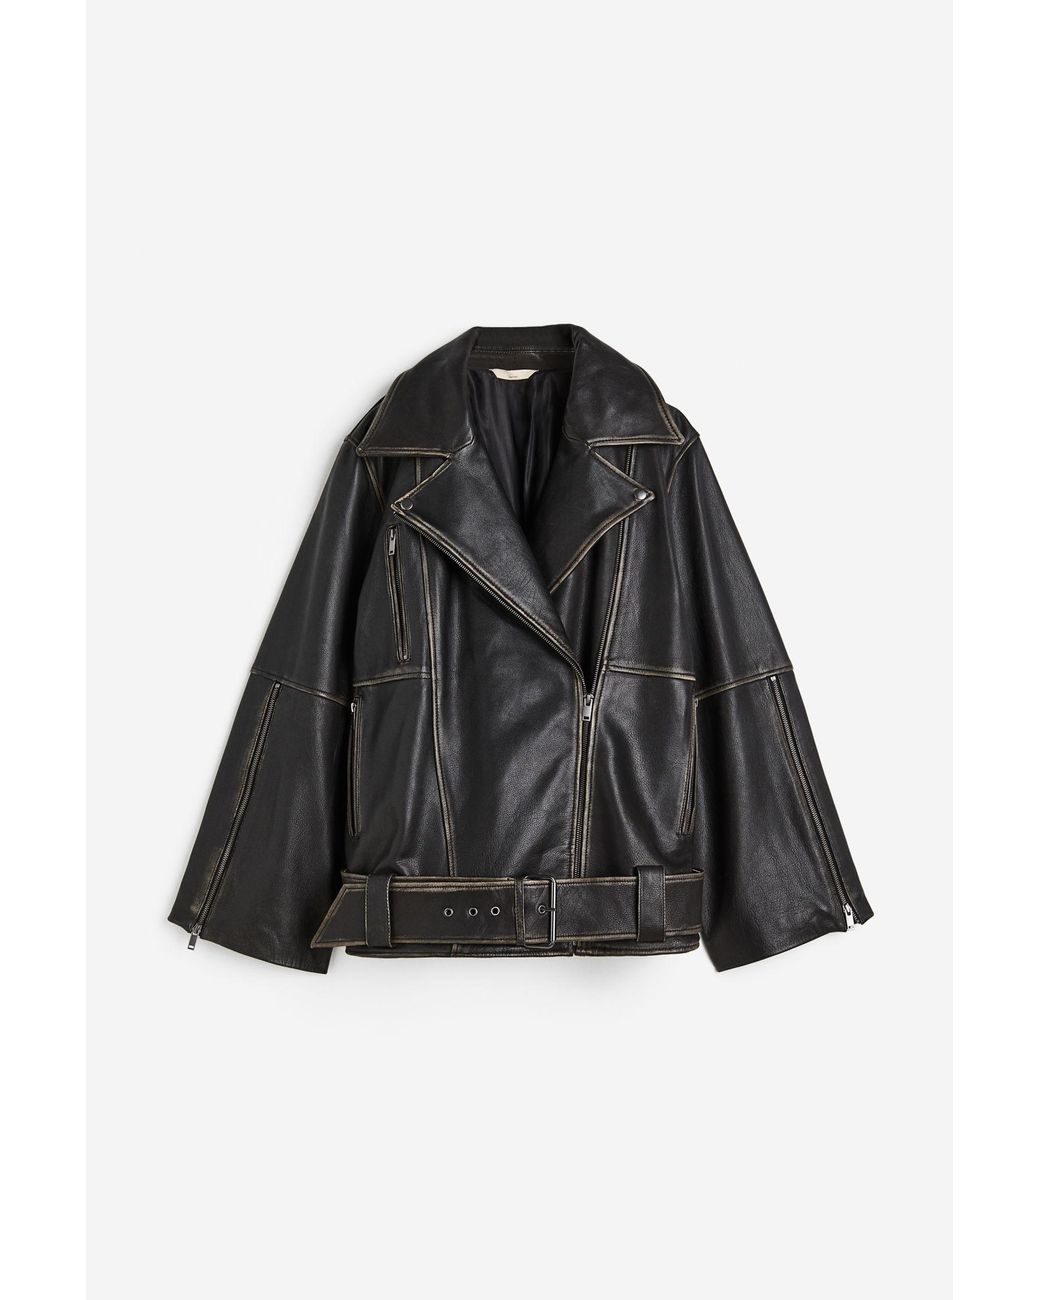 H&M Leather Biker Jacket in Black | Lyst UK